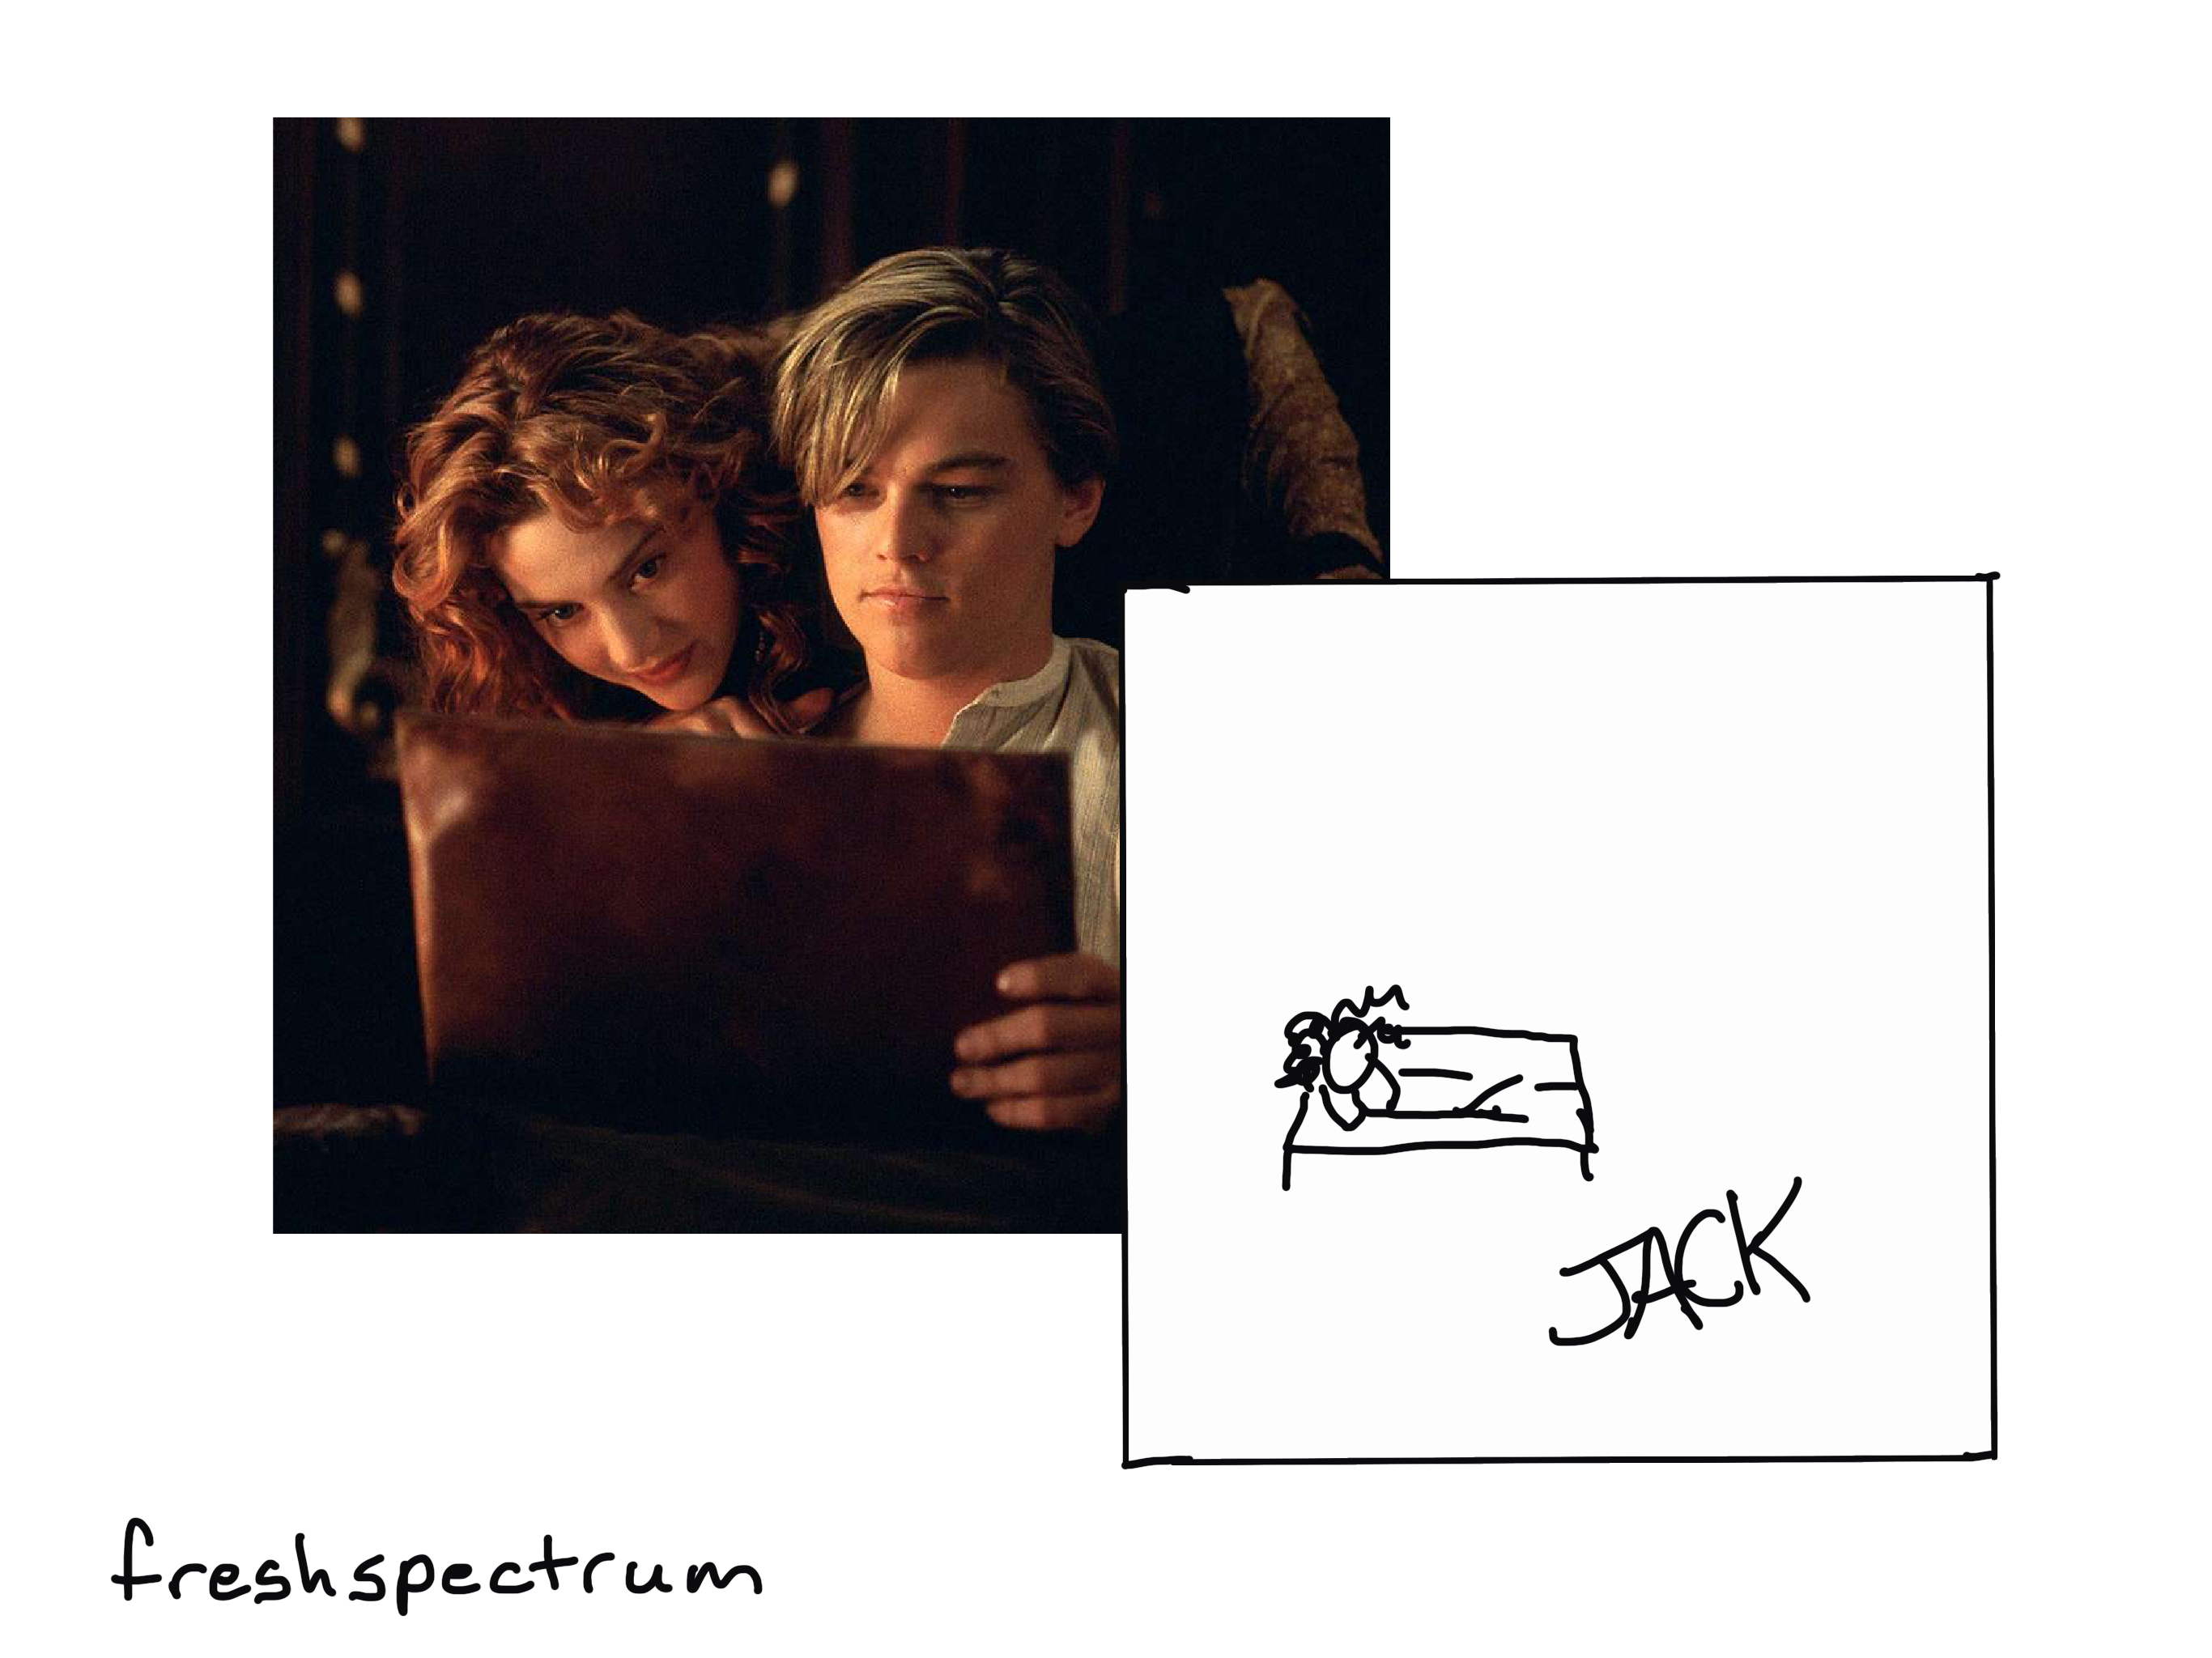 Jacks Drawing